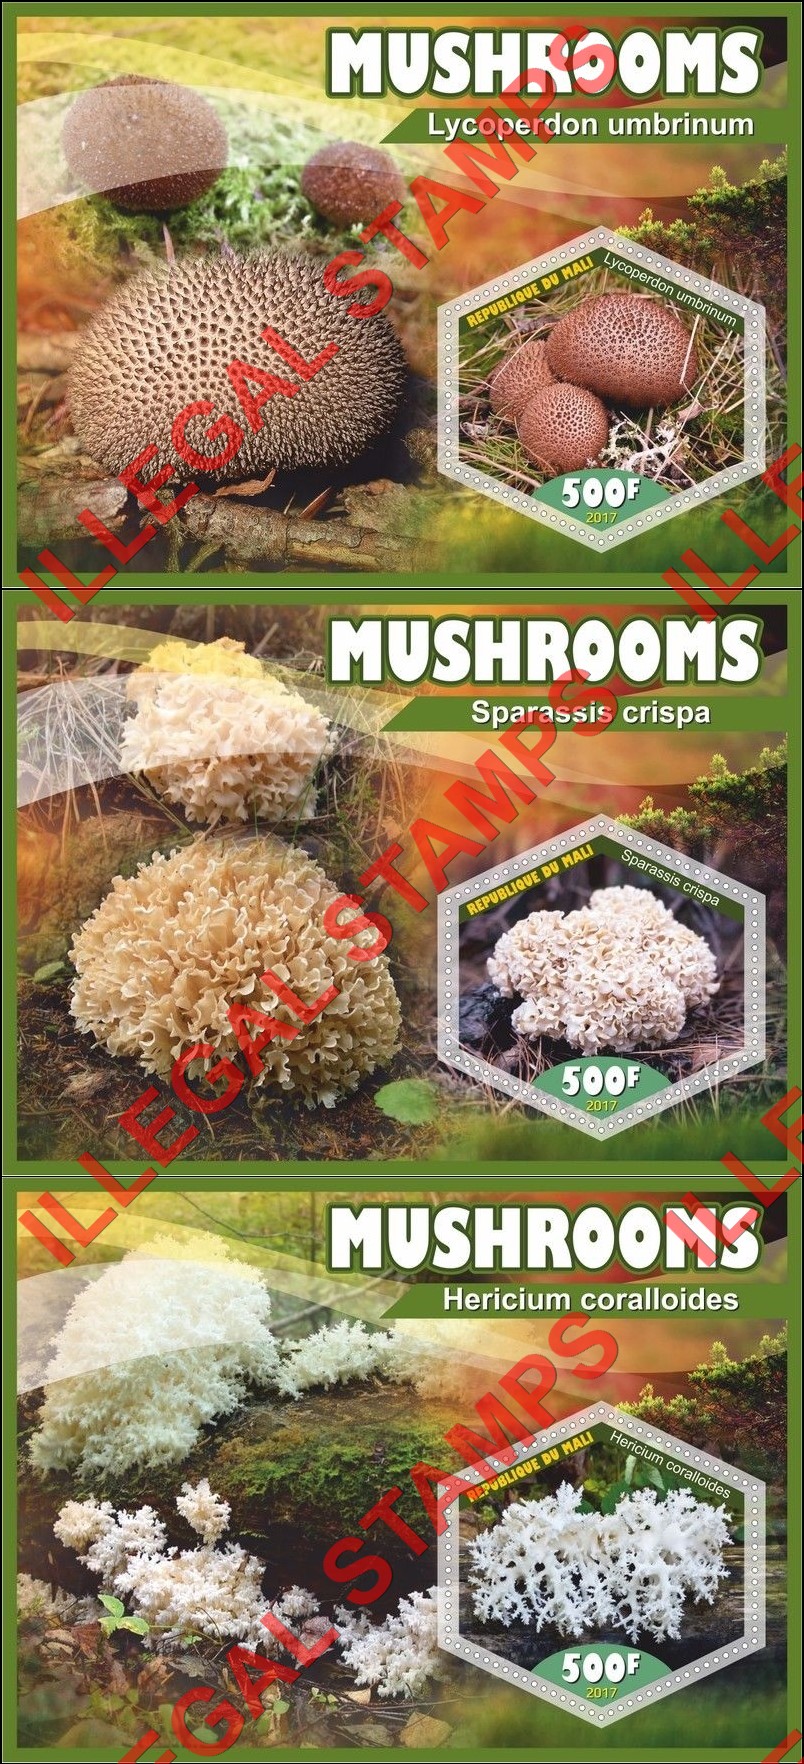 Mali 2017 Mushrooms Illegal Stamp Souvenir Sheets of 1 (Part 1)